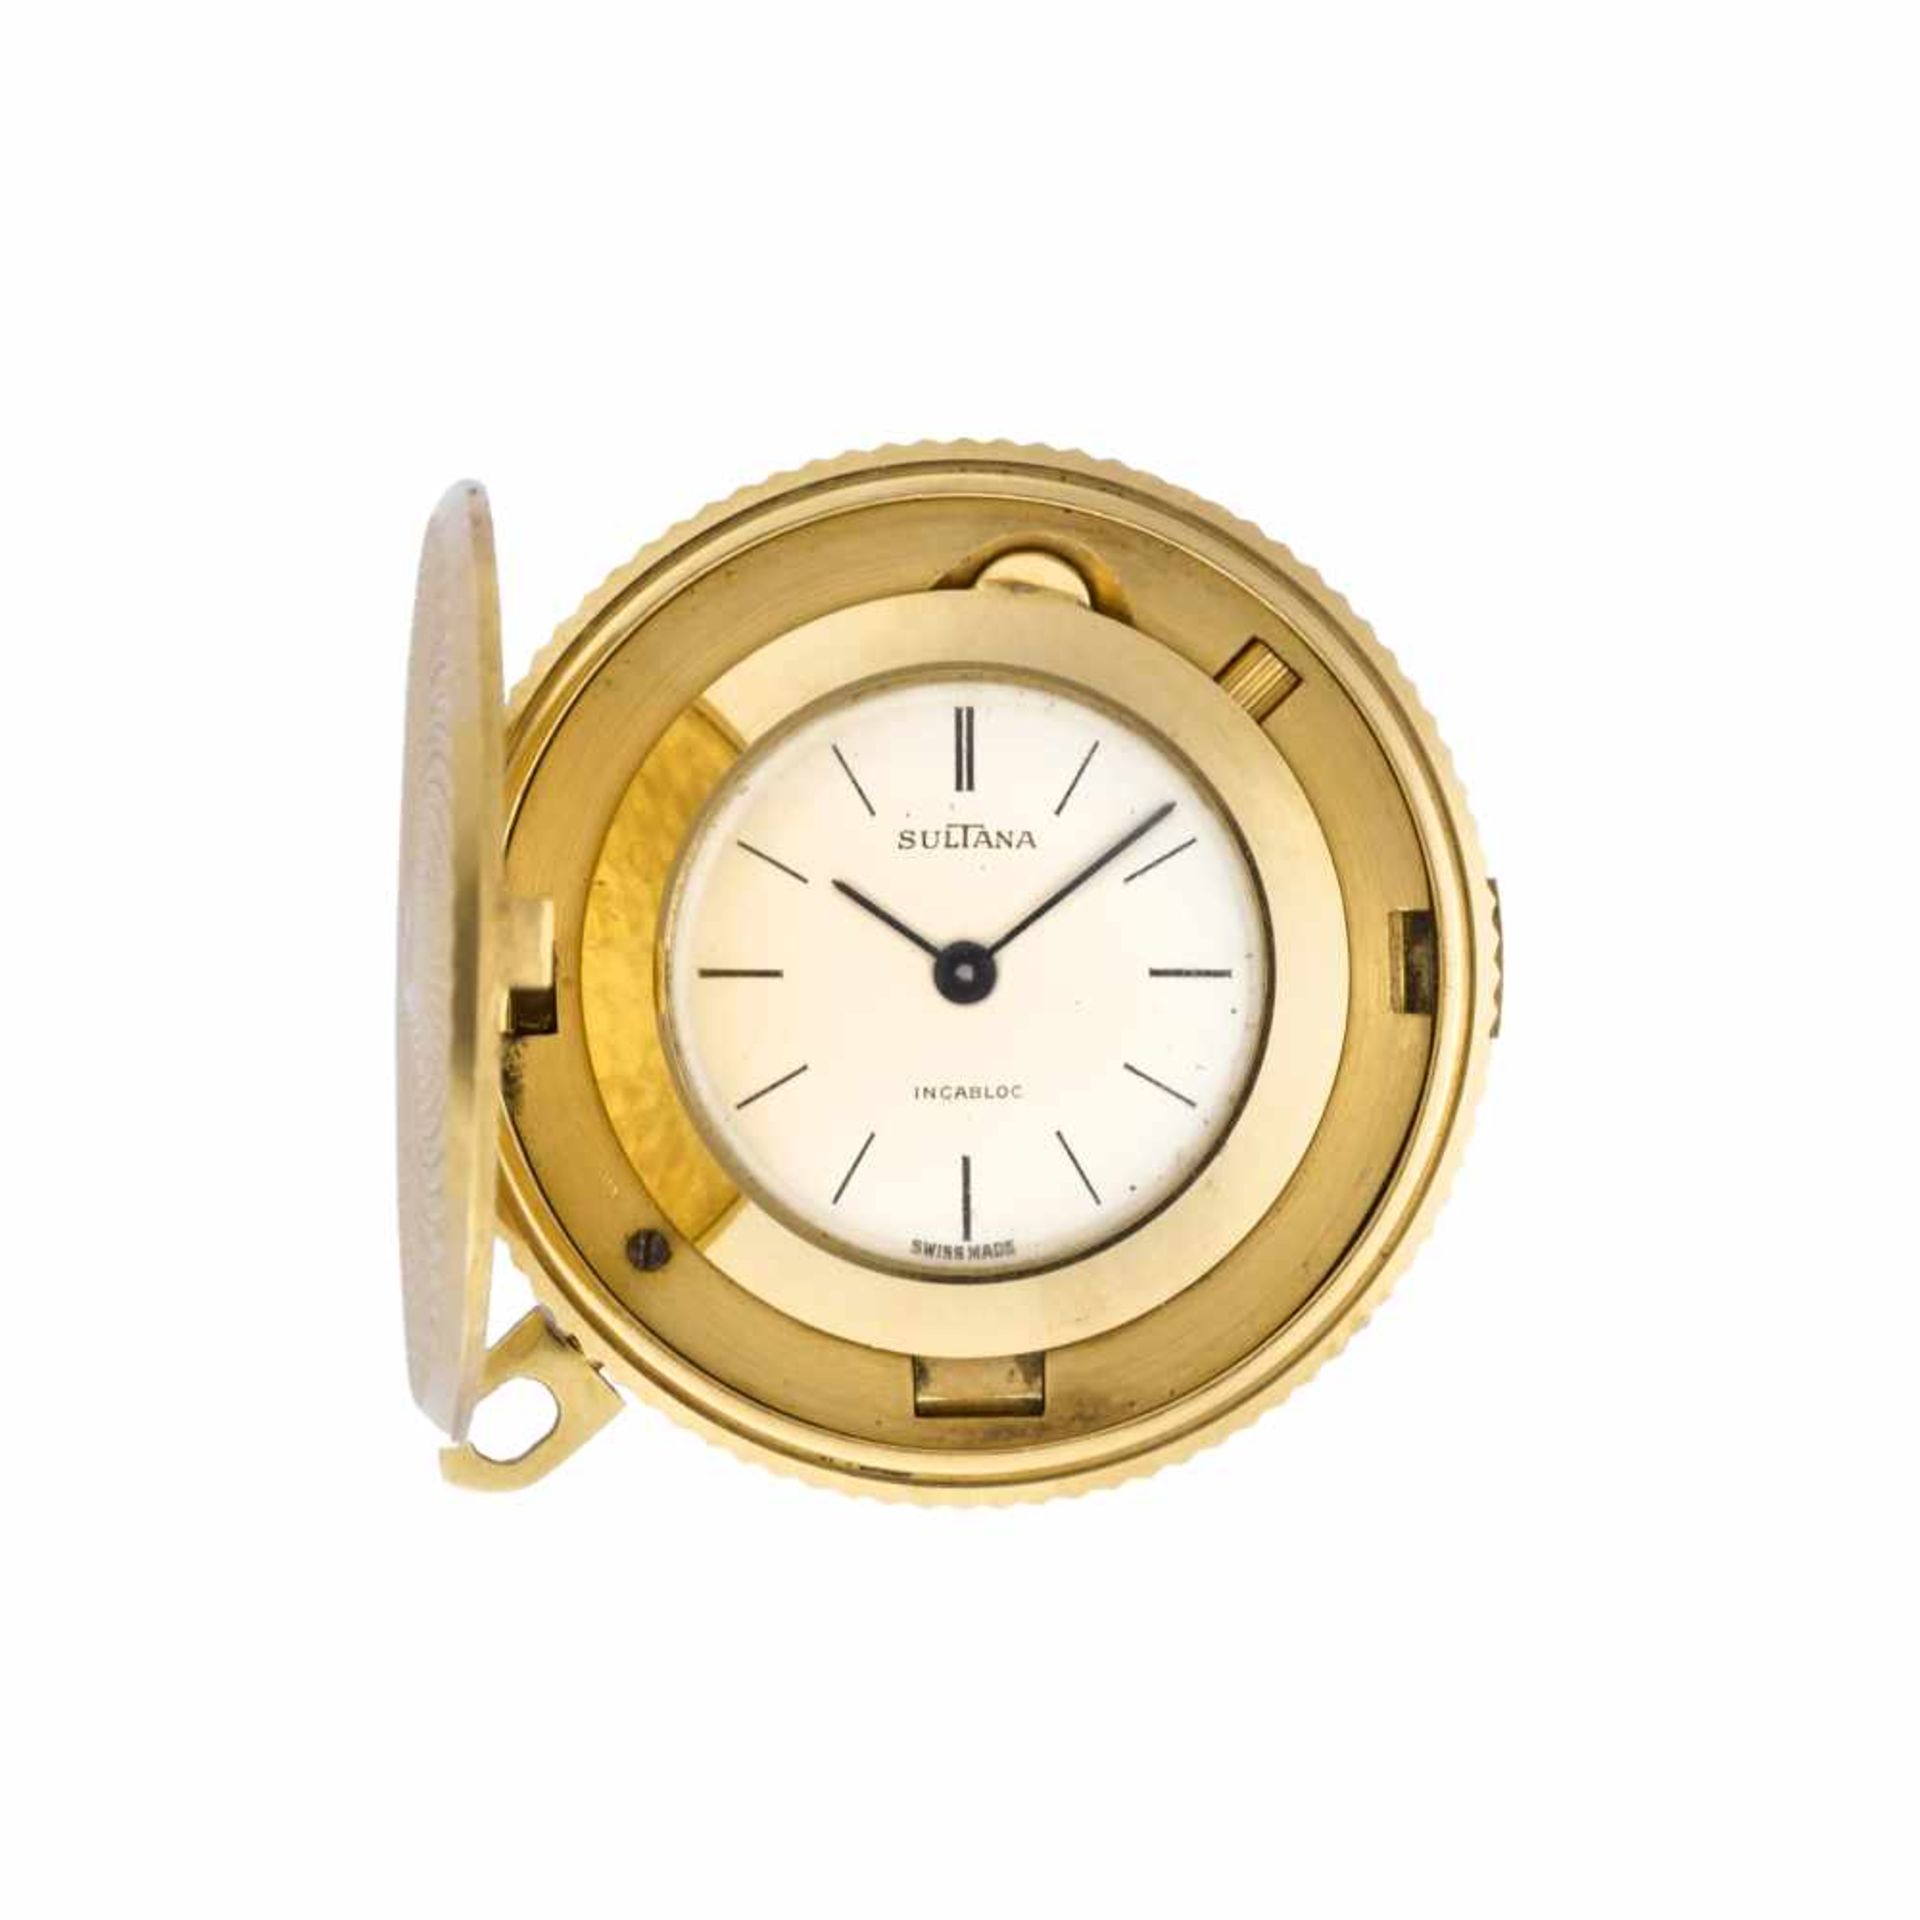 SULTANA18K gold savonnette pocket watchHalf 20th centuryDial signedManual wind movementWhite dial